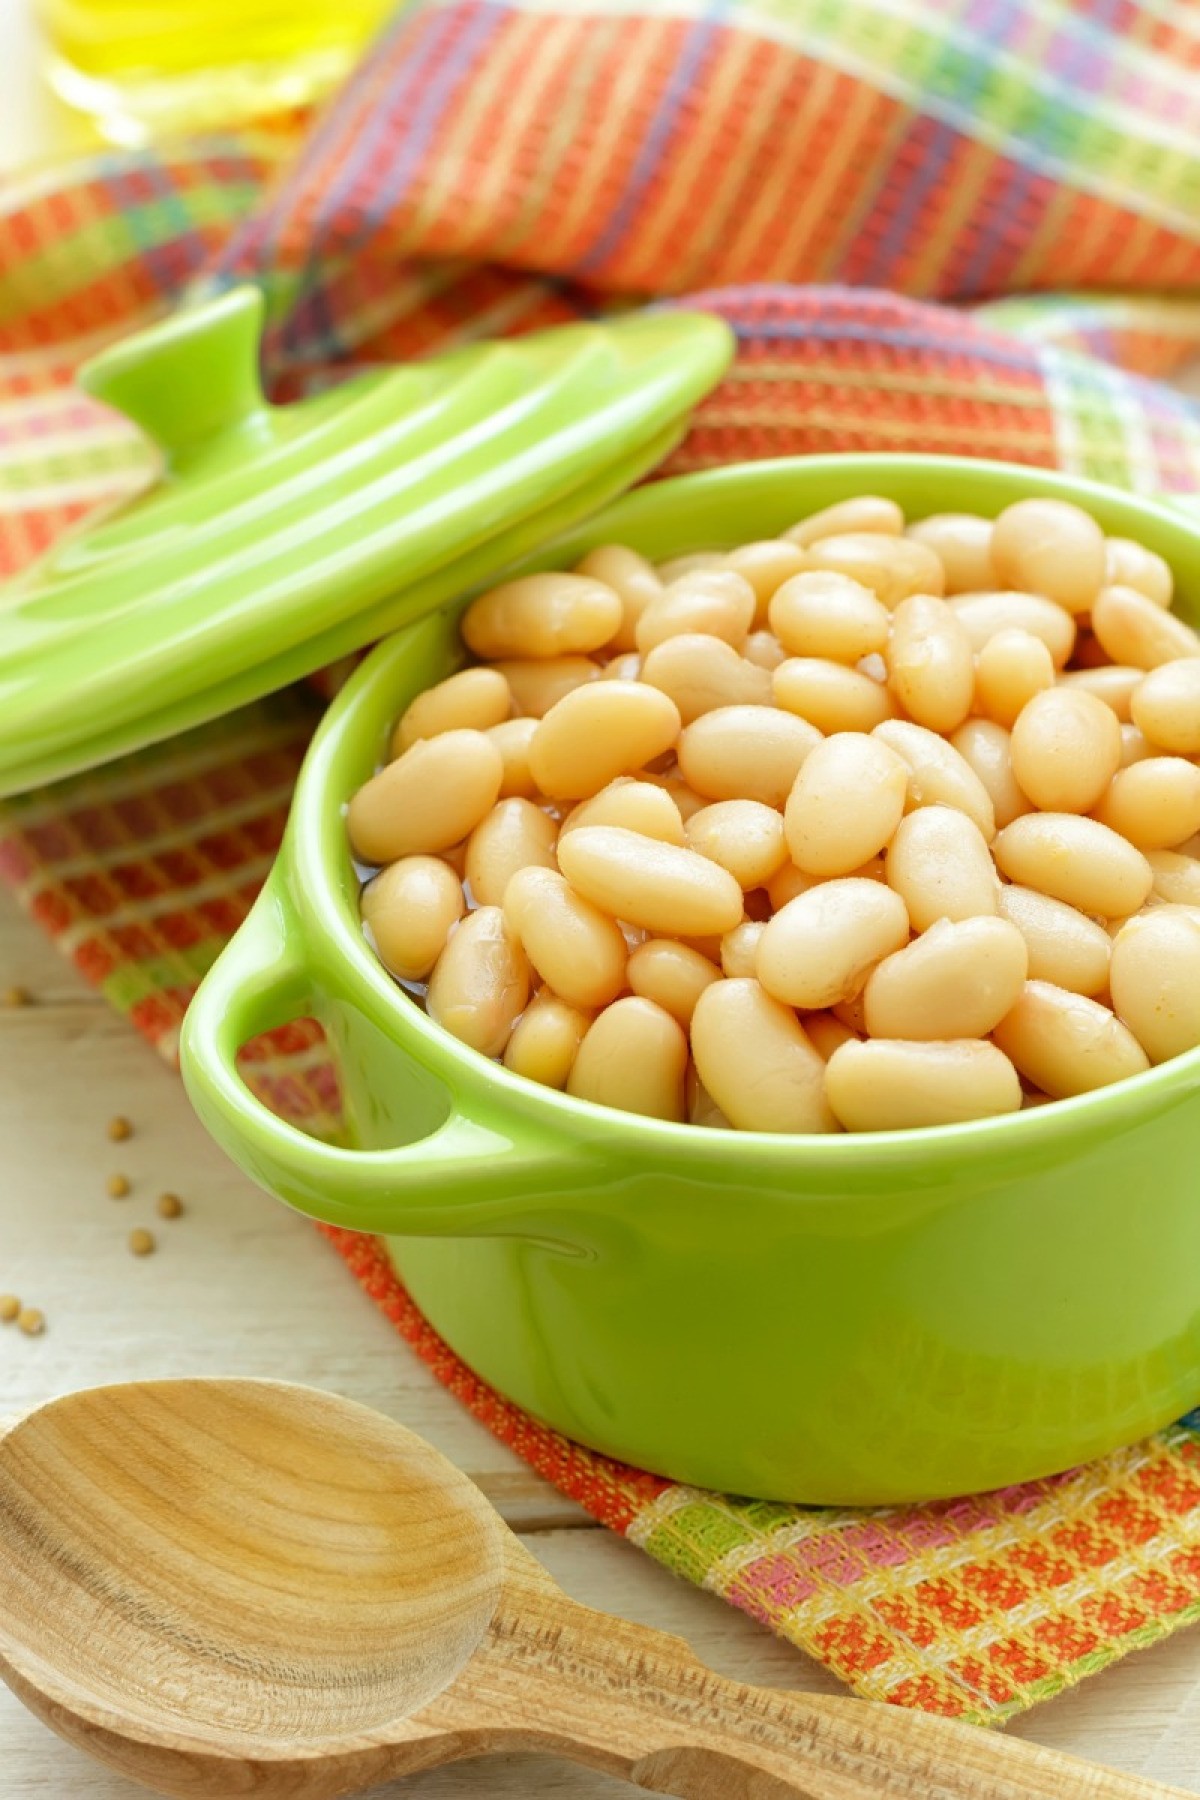 Recipes Using White Beans | ThriftyFun